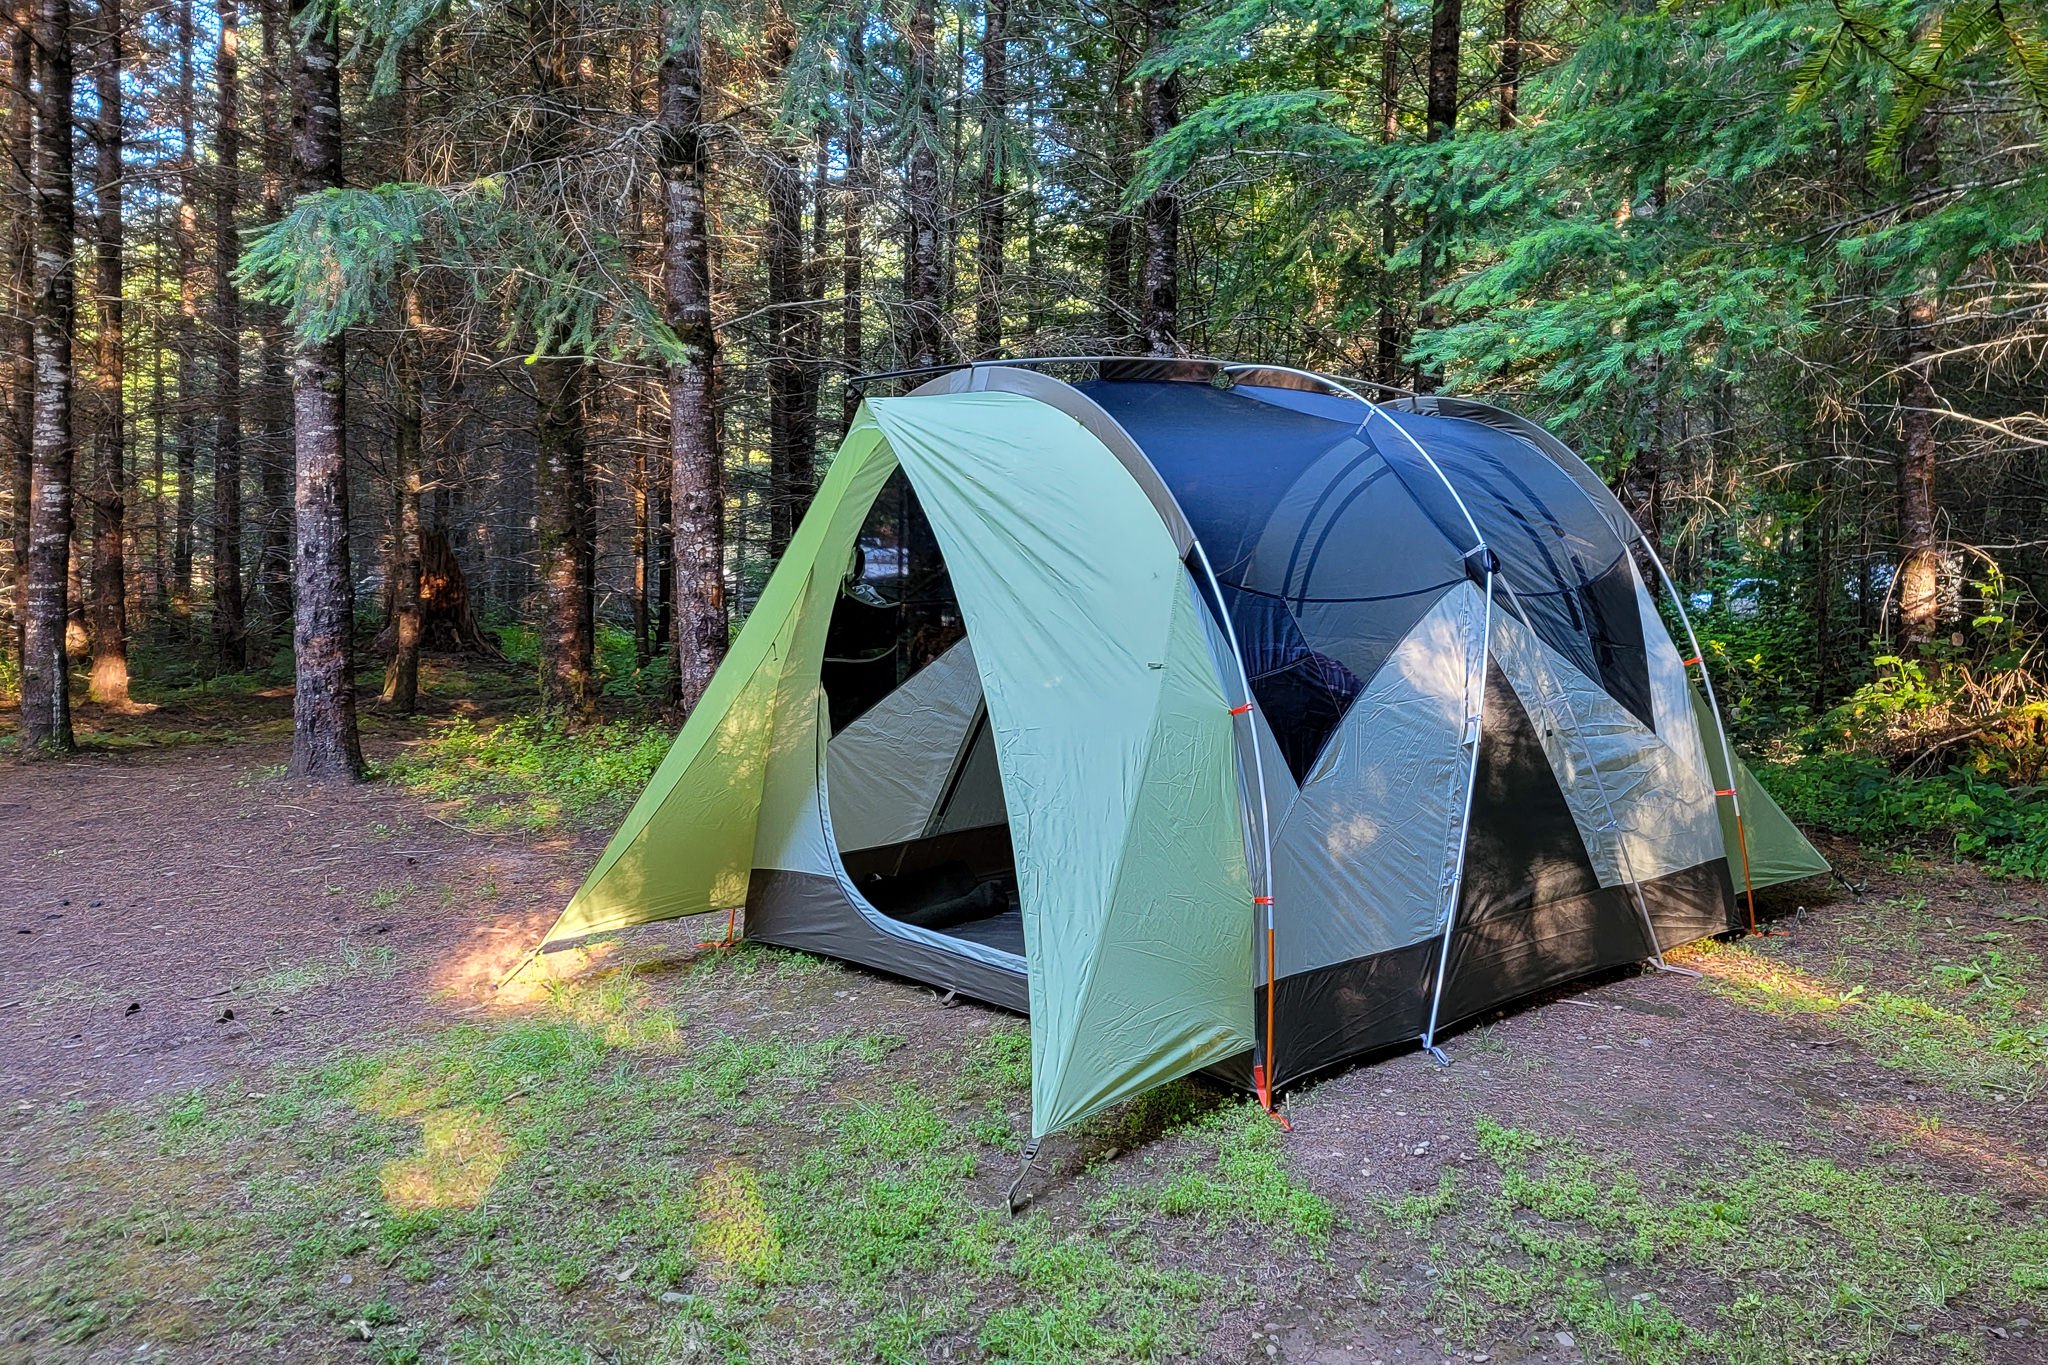 The REI Wonderland 4 Tent